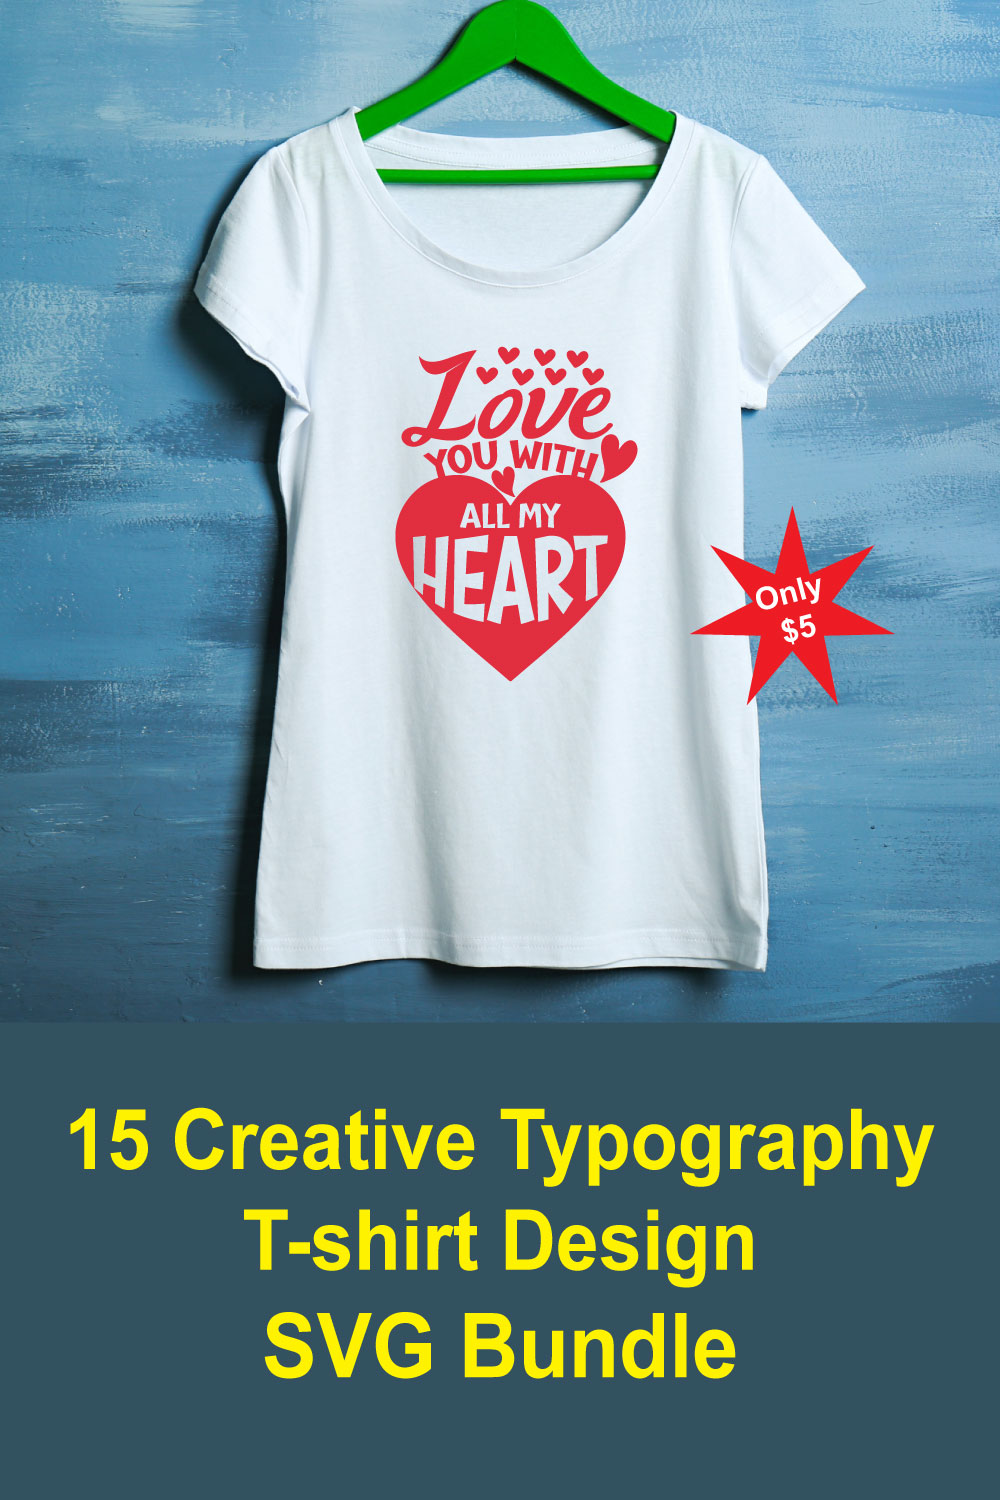 15 Creative Typography T-shirt Designs pinterest image.